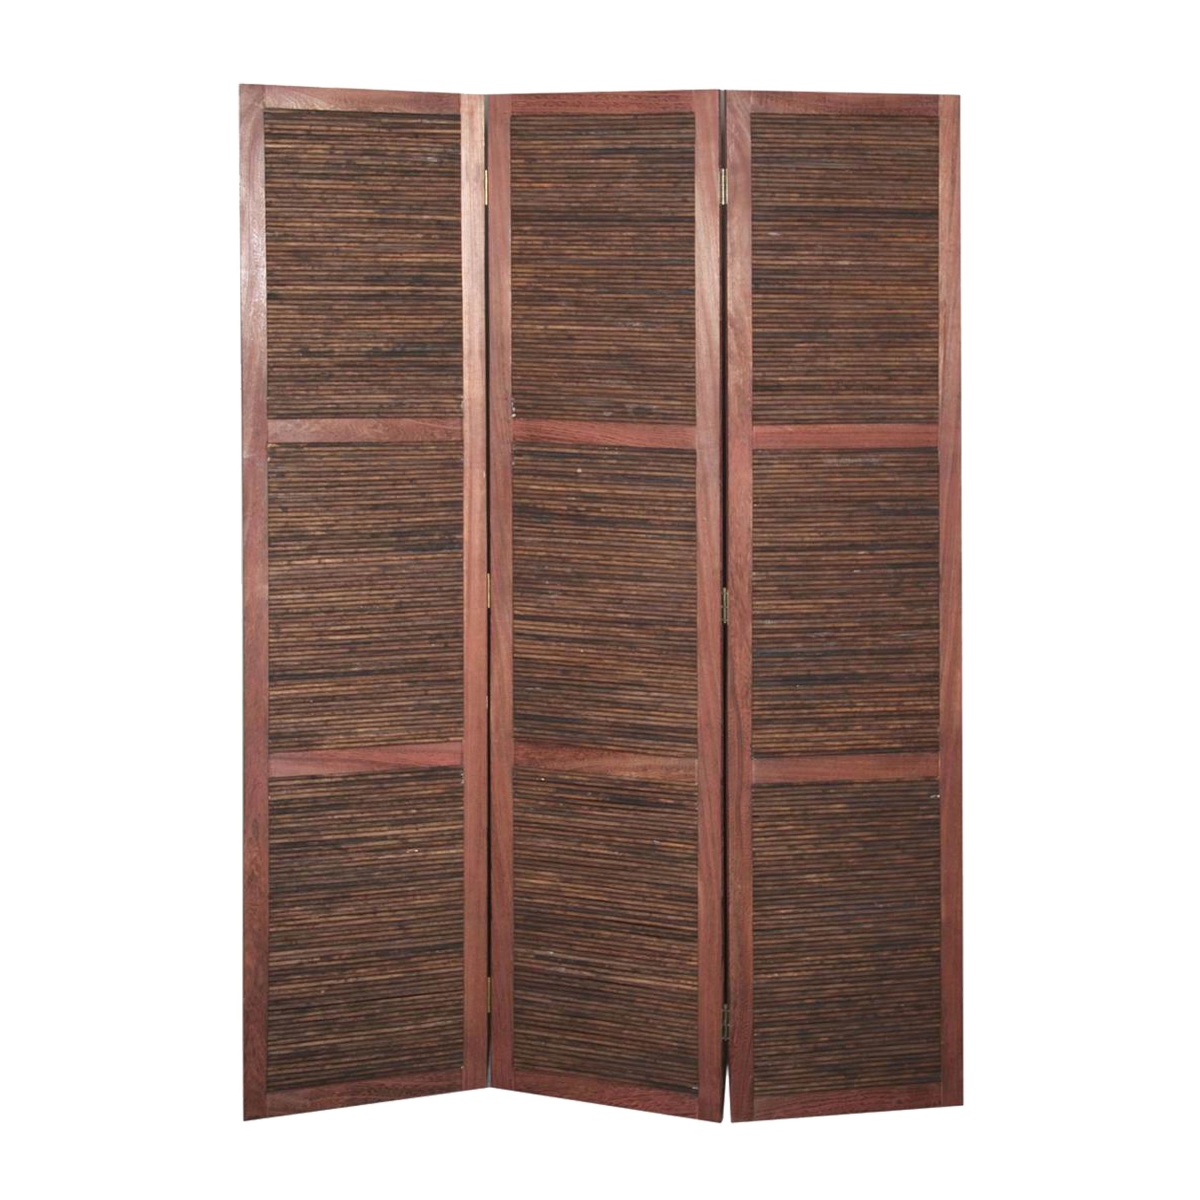 342750 47 X 1.5 X 67 In. Decorative Brown Wood Bambusa Screen